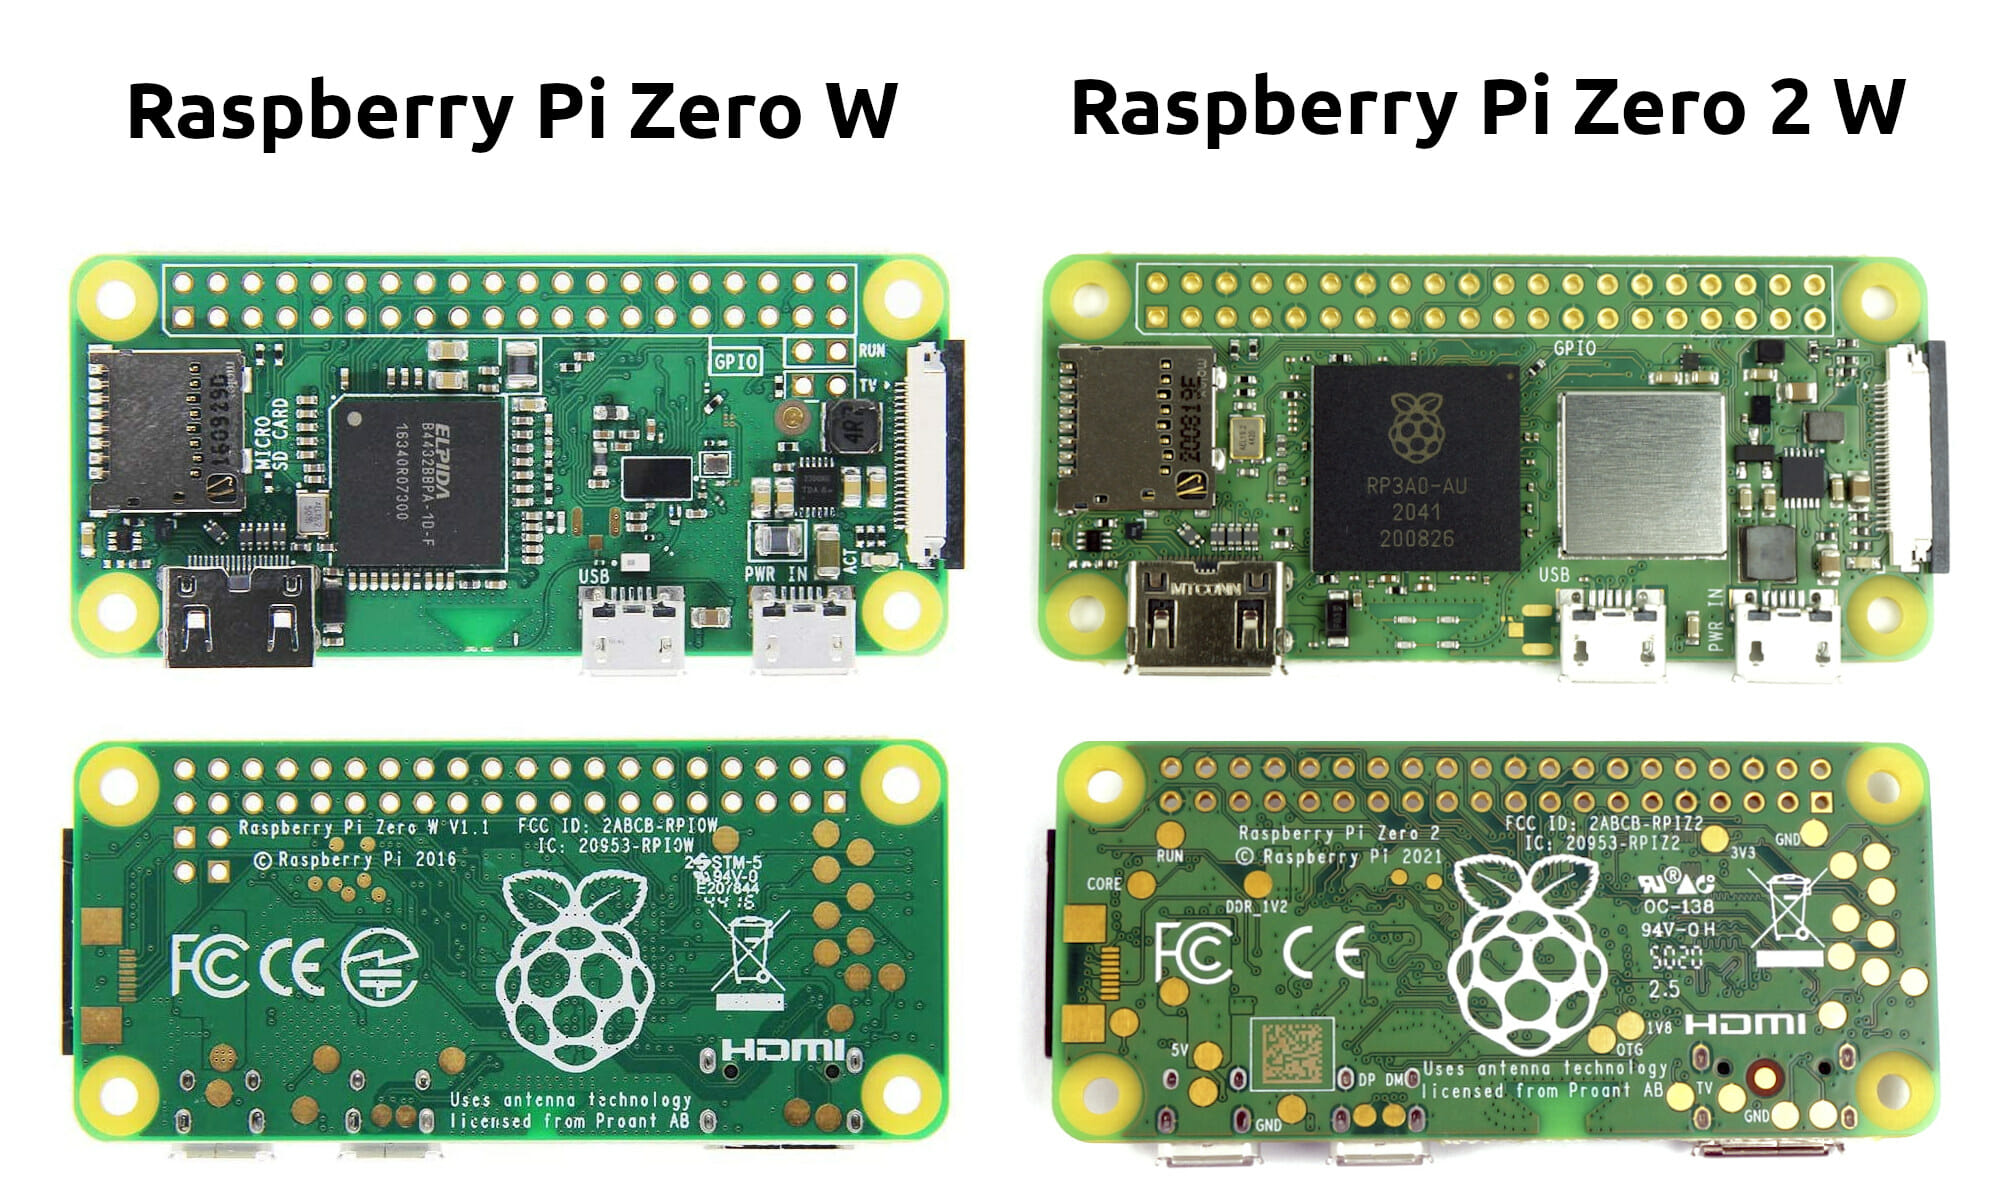 Raspberry Pi Zero W with HEADER - v1.1